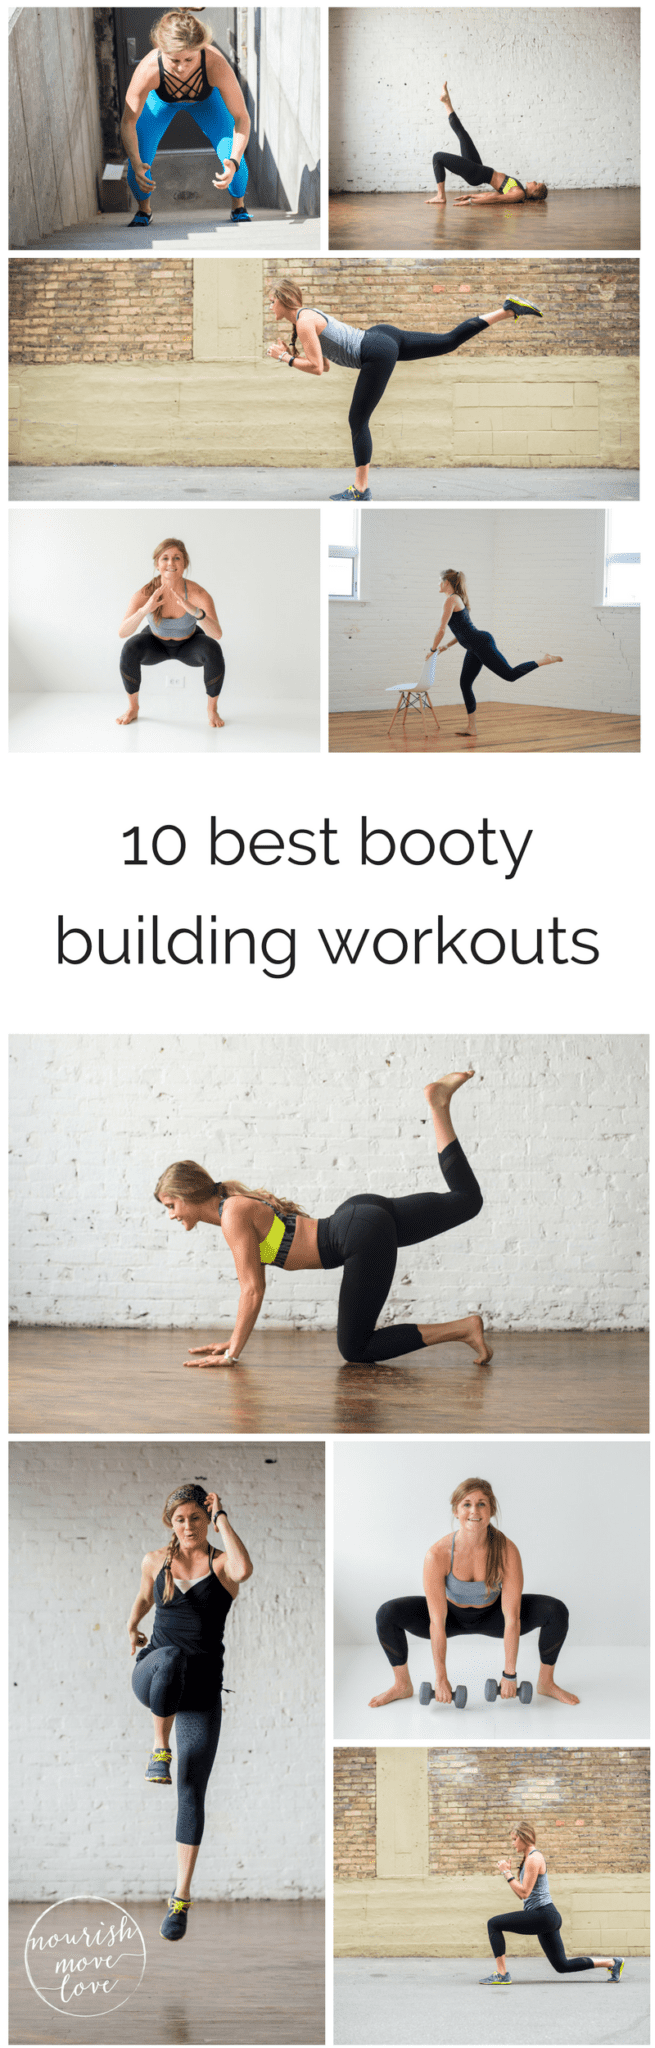 10 best booty building workouts | www.nourishmovelove.com